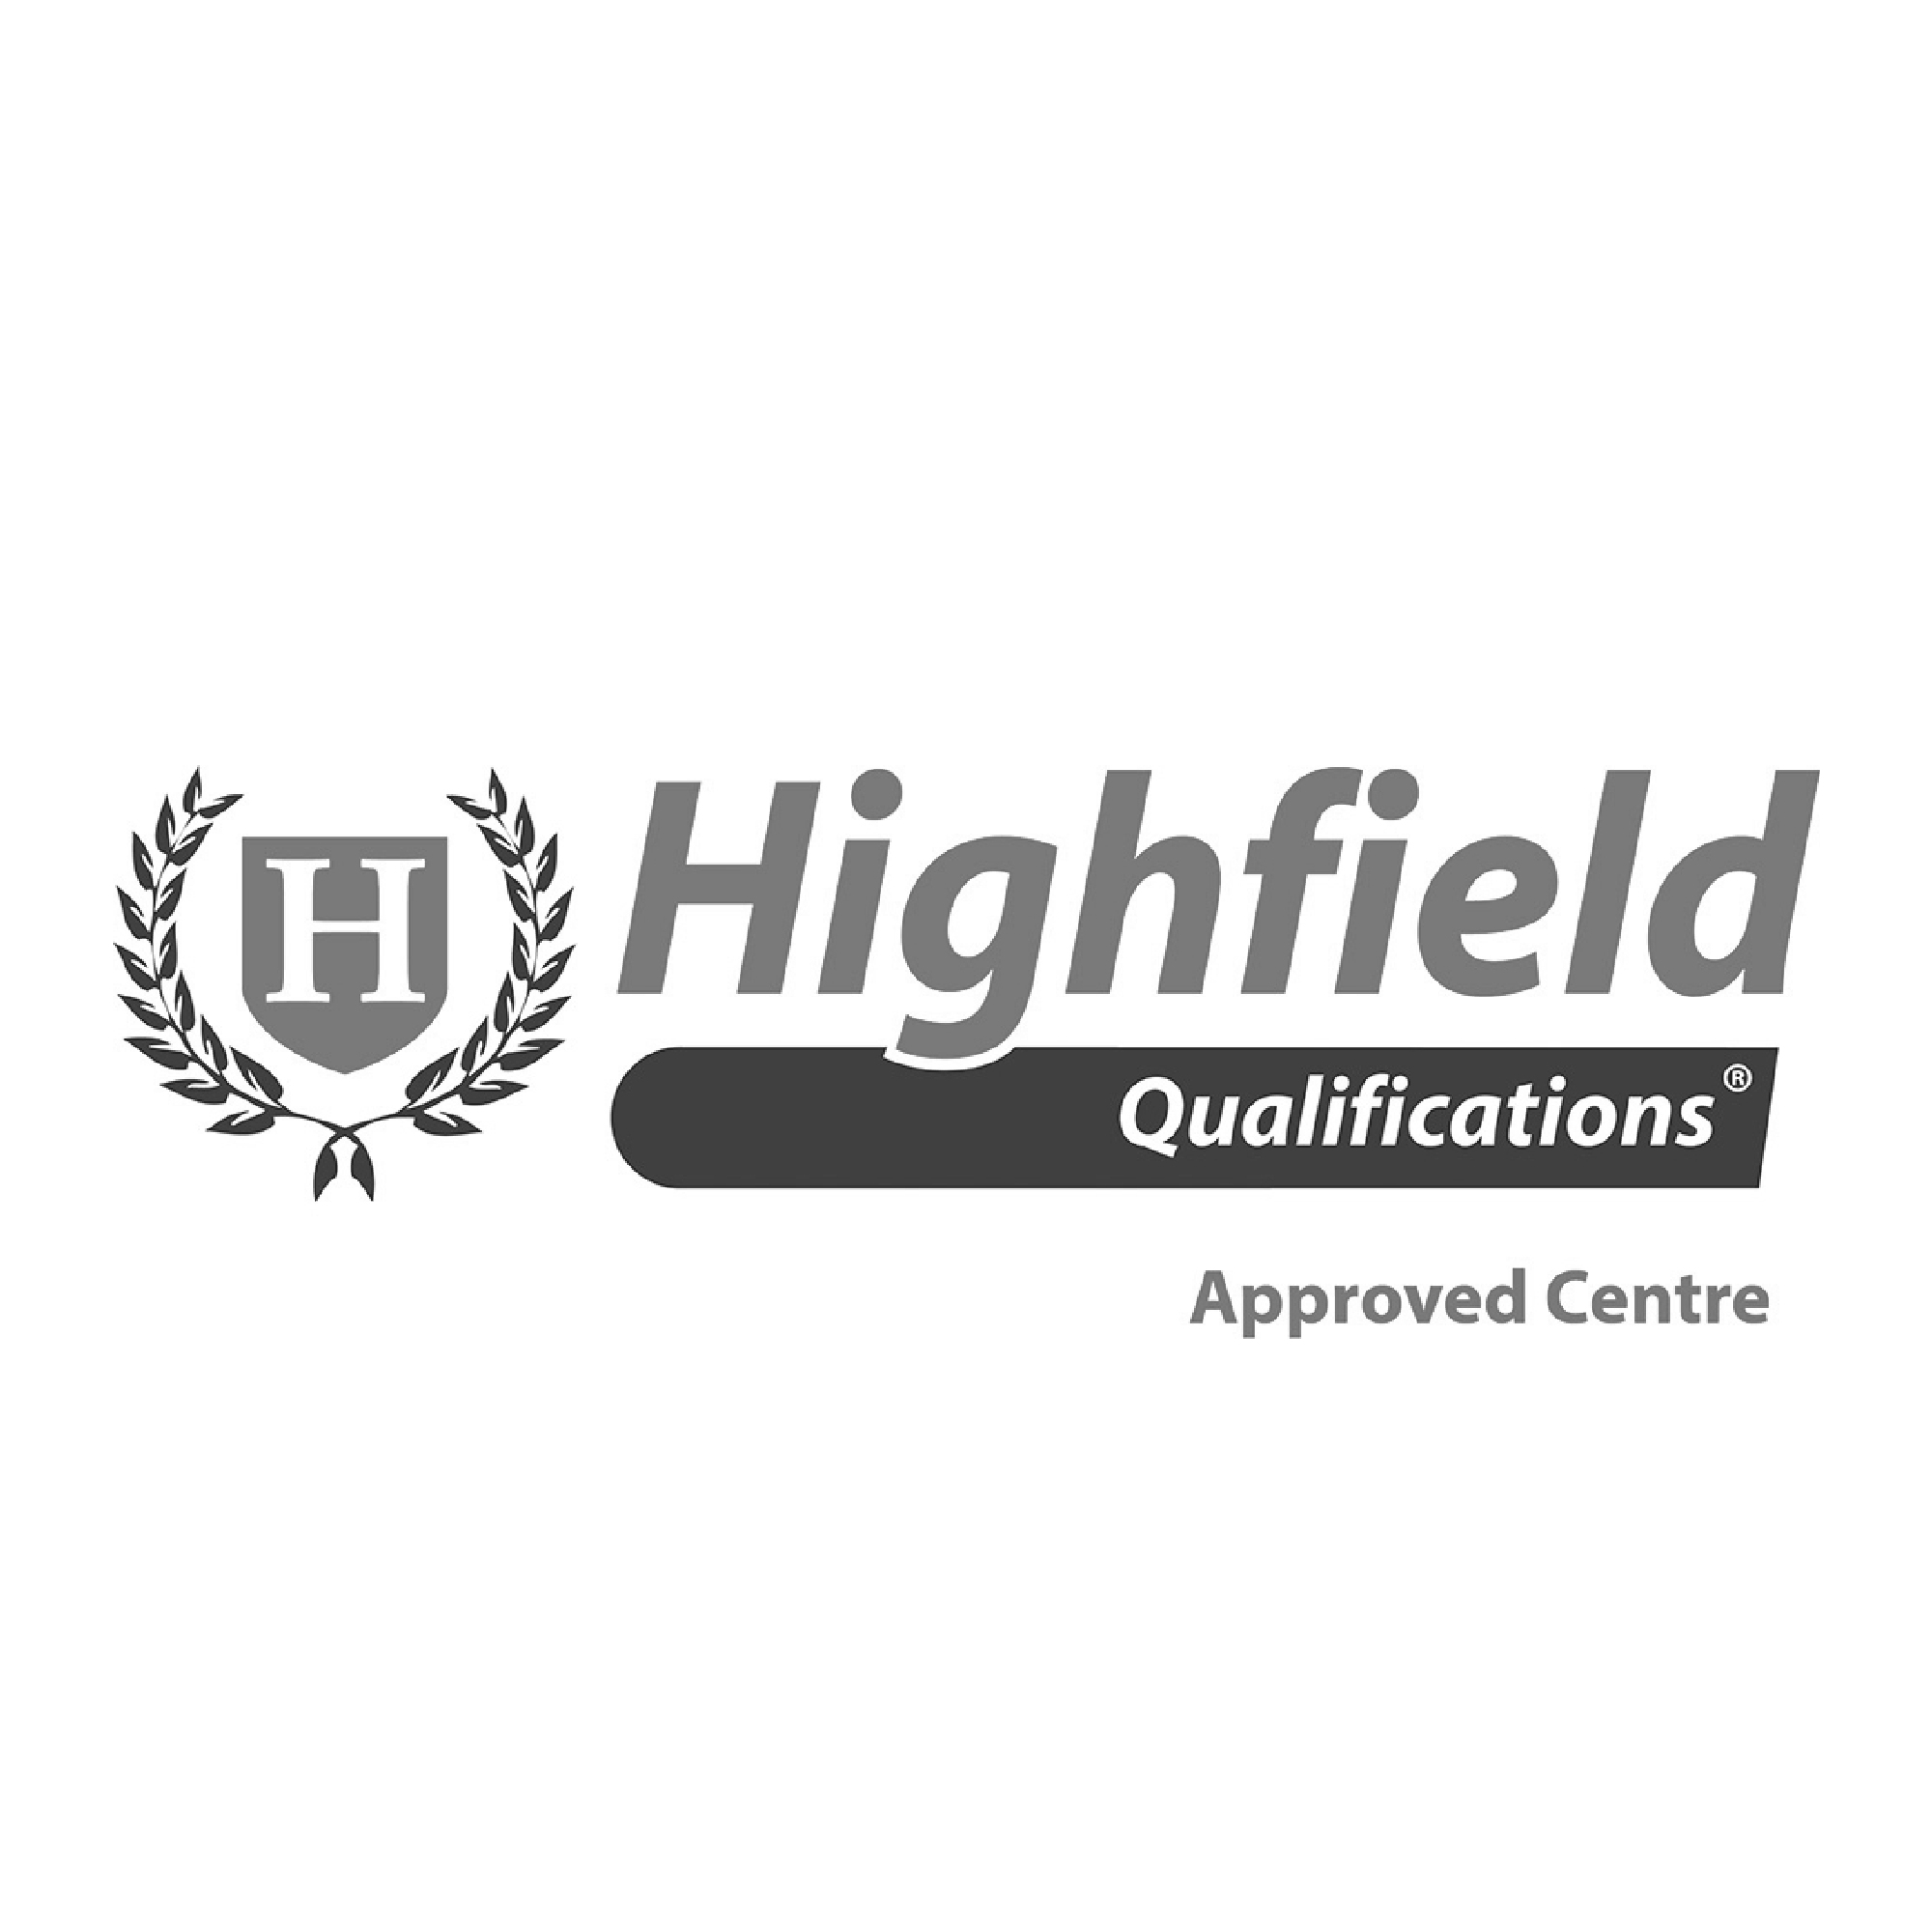 Highfield Qualifications (Copy) (Copy) (Copy) (Copy)